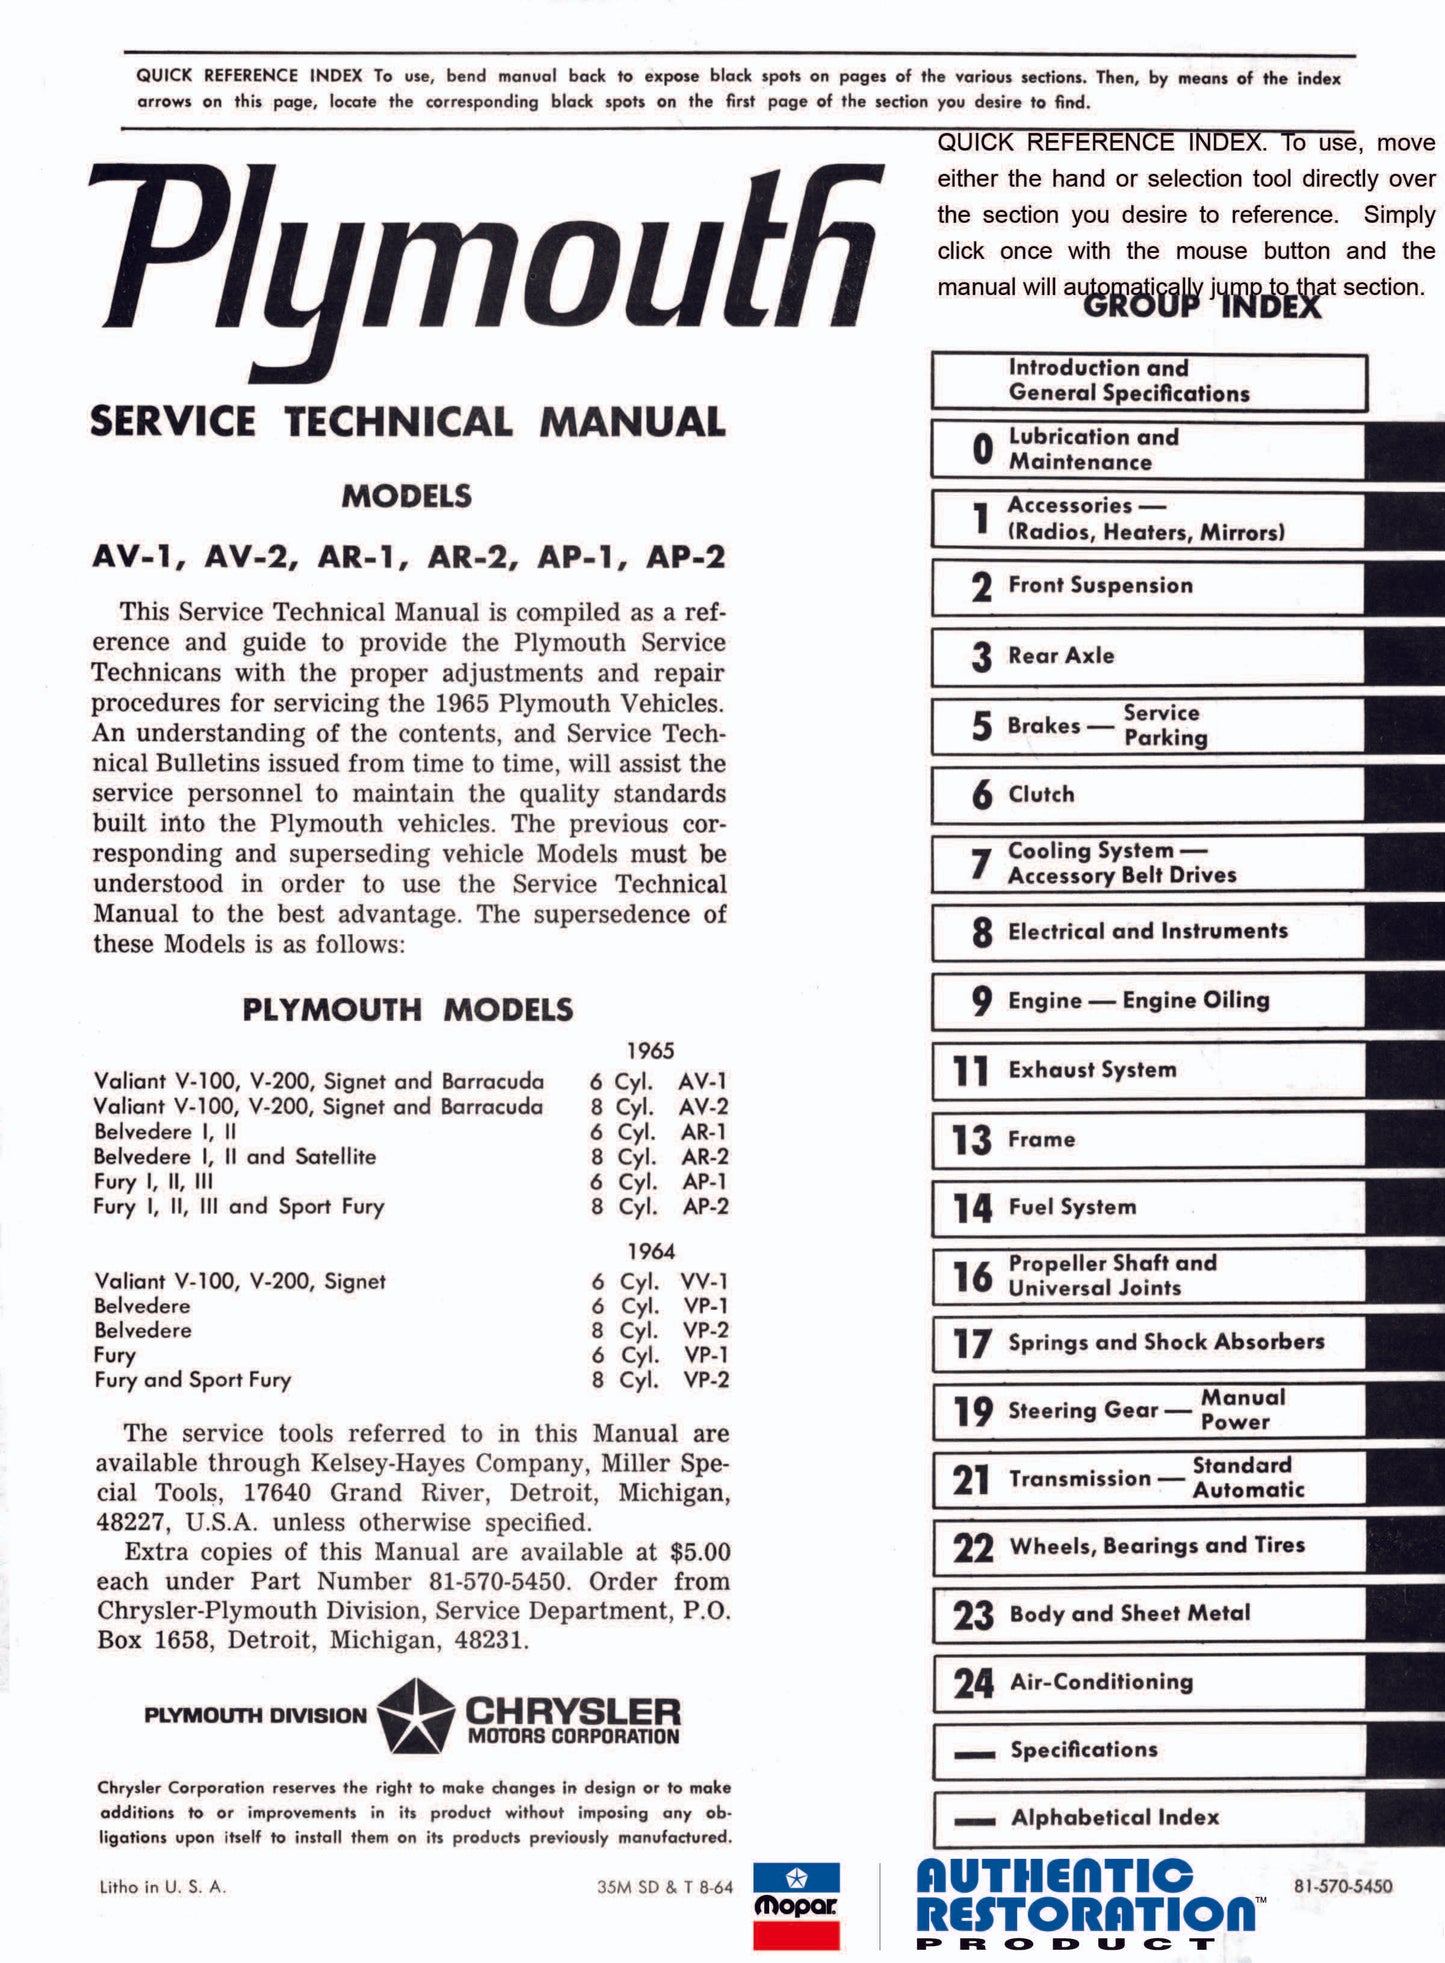 1965 Plymouth - Shop Manual